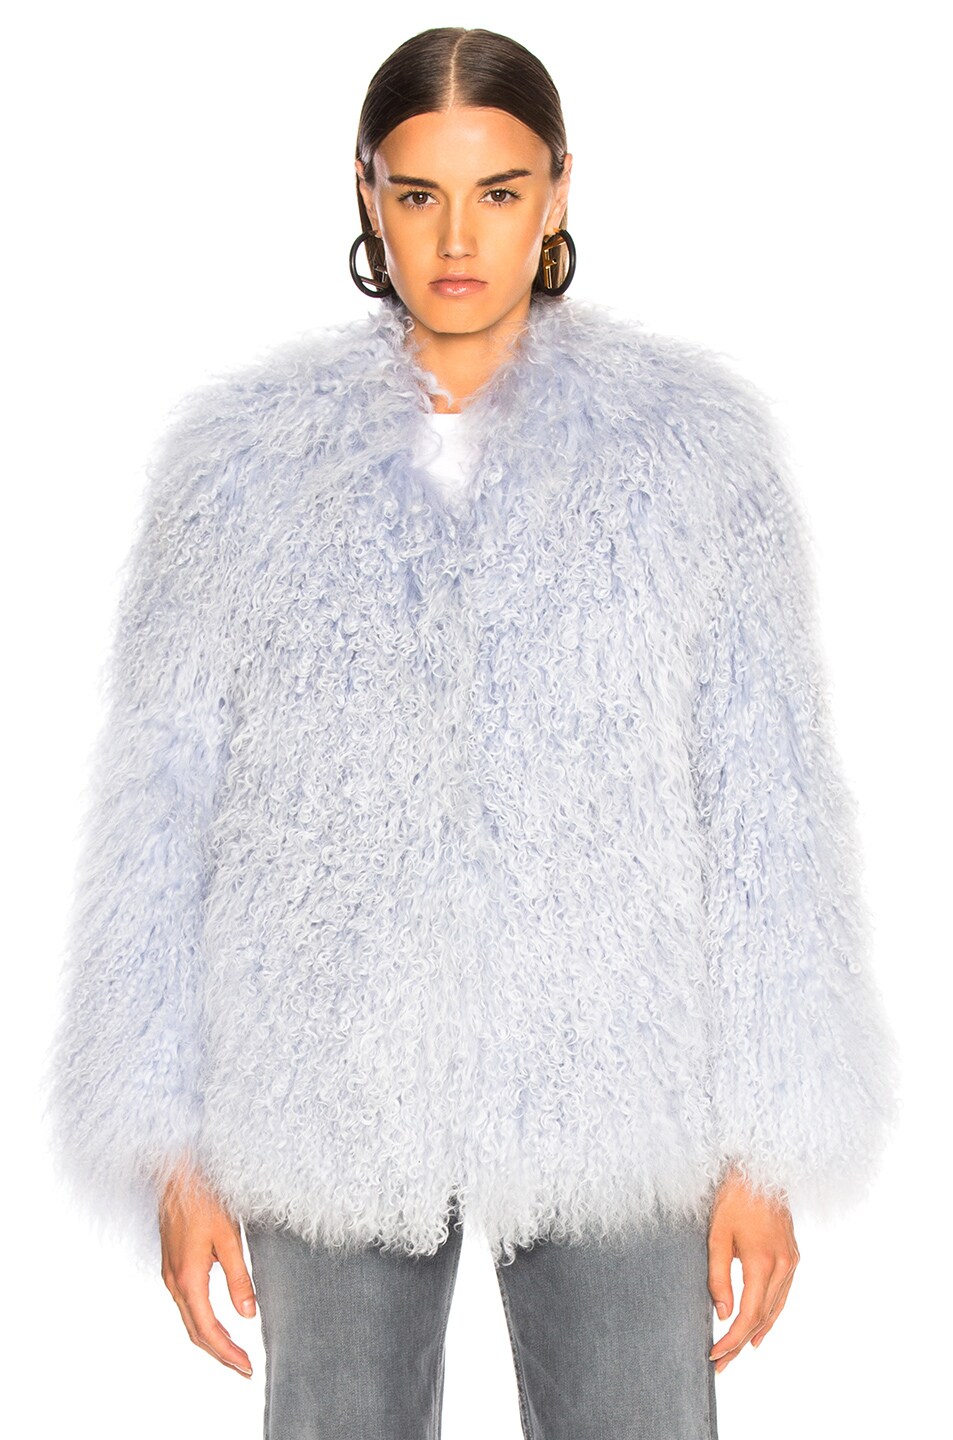 Sprung Alma Fur Coat in Lavender | FWRD